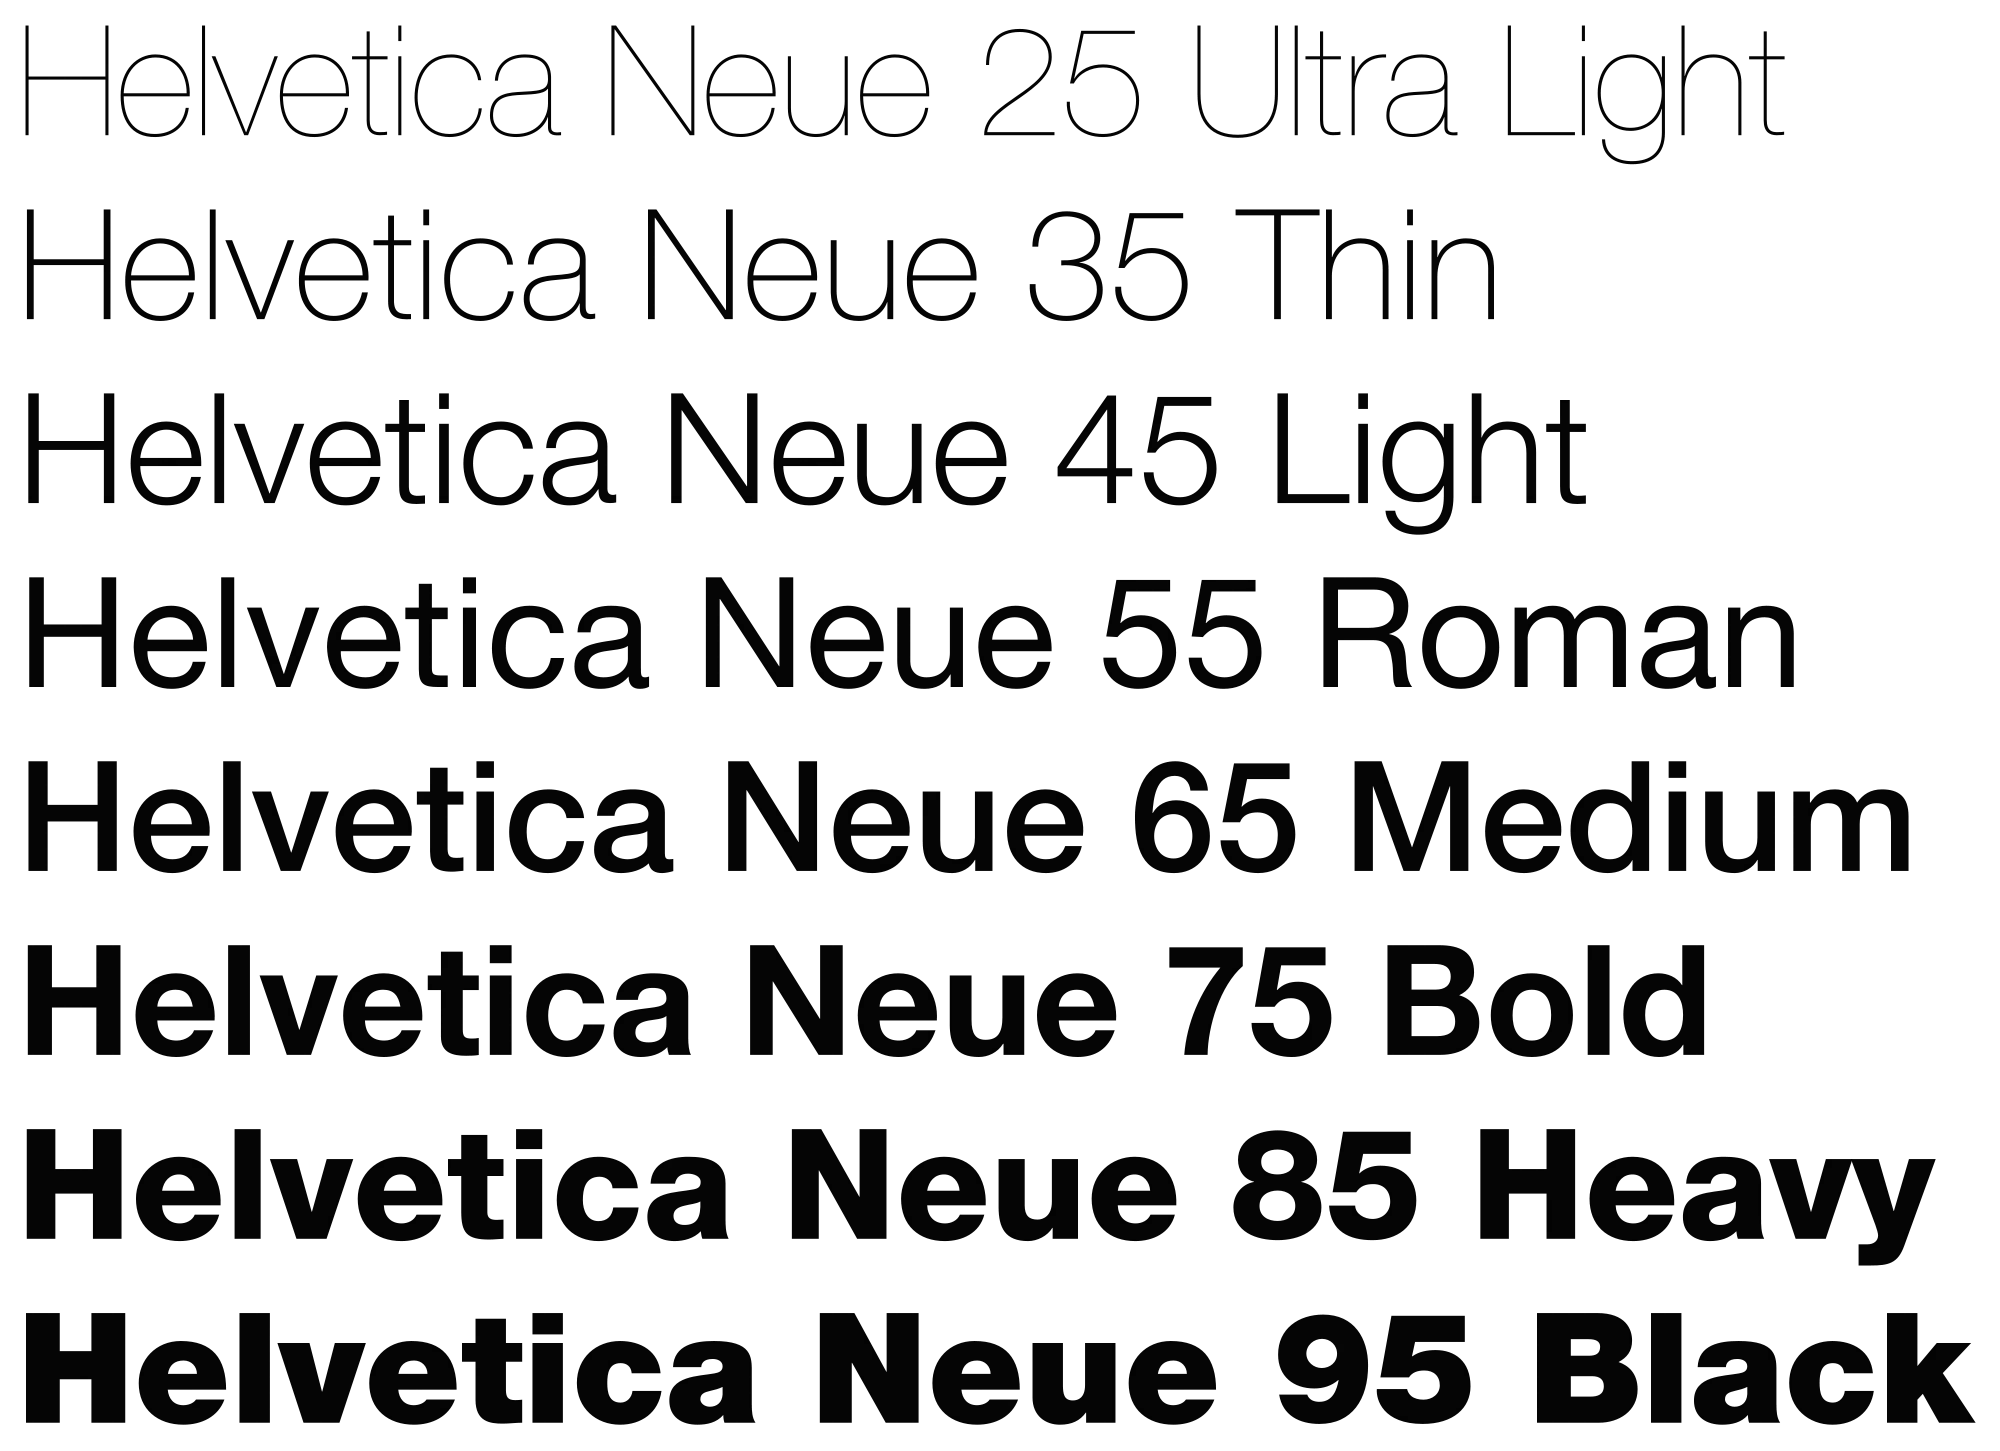 Helvetica (Wikipedia)